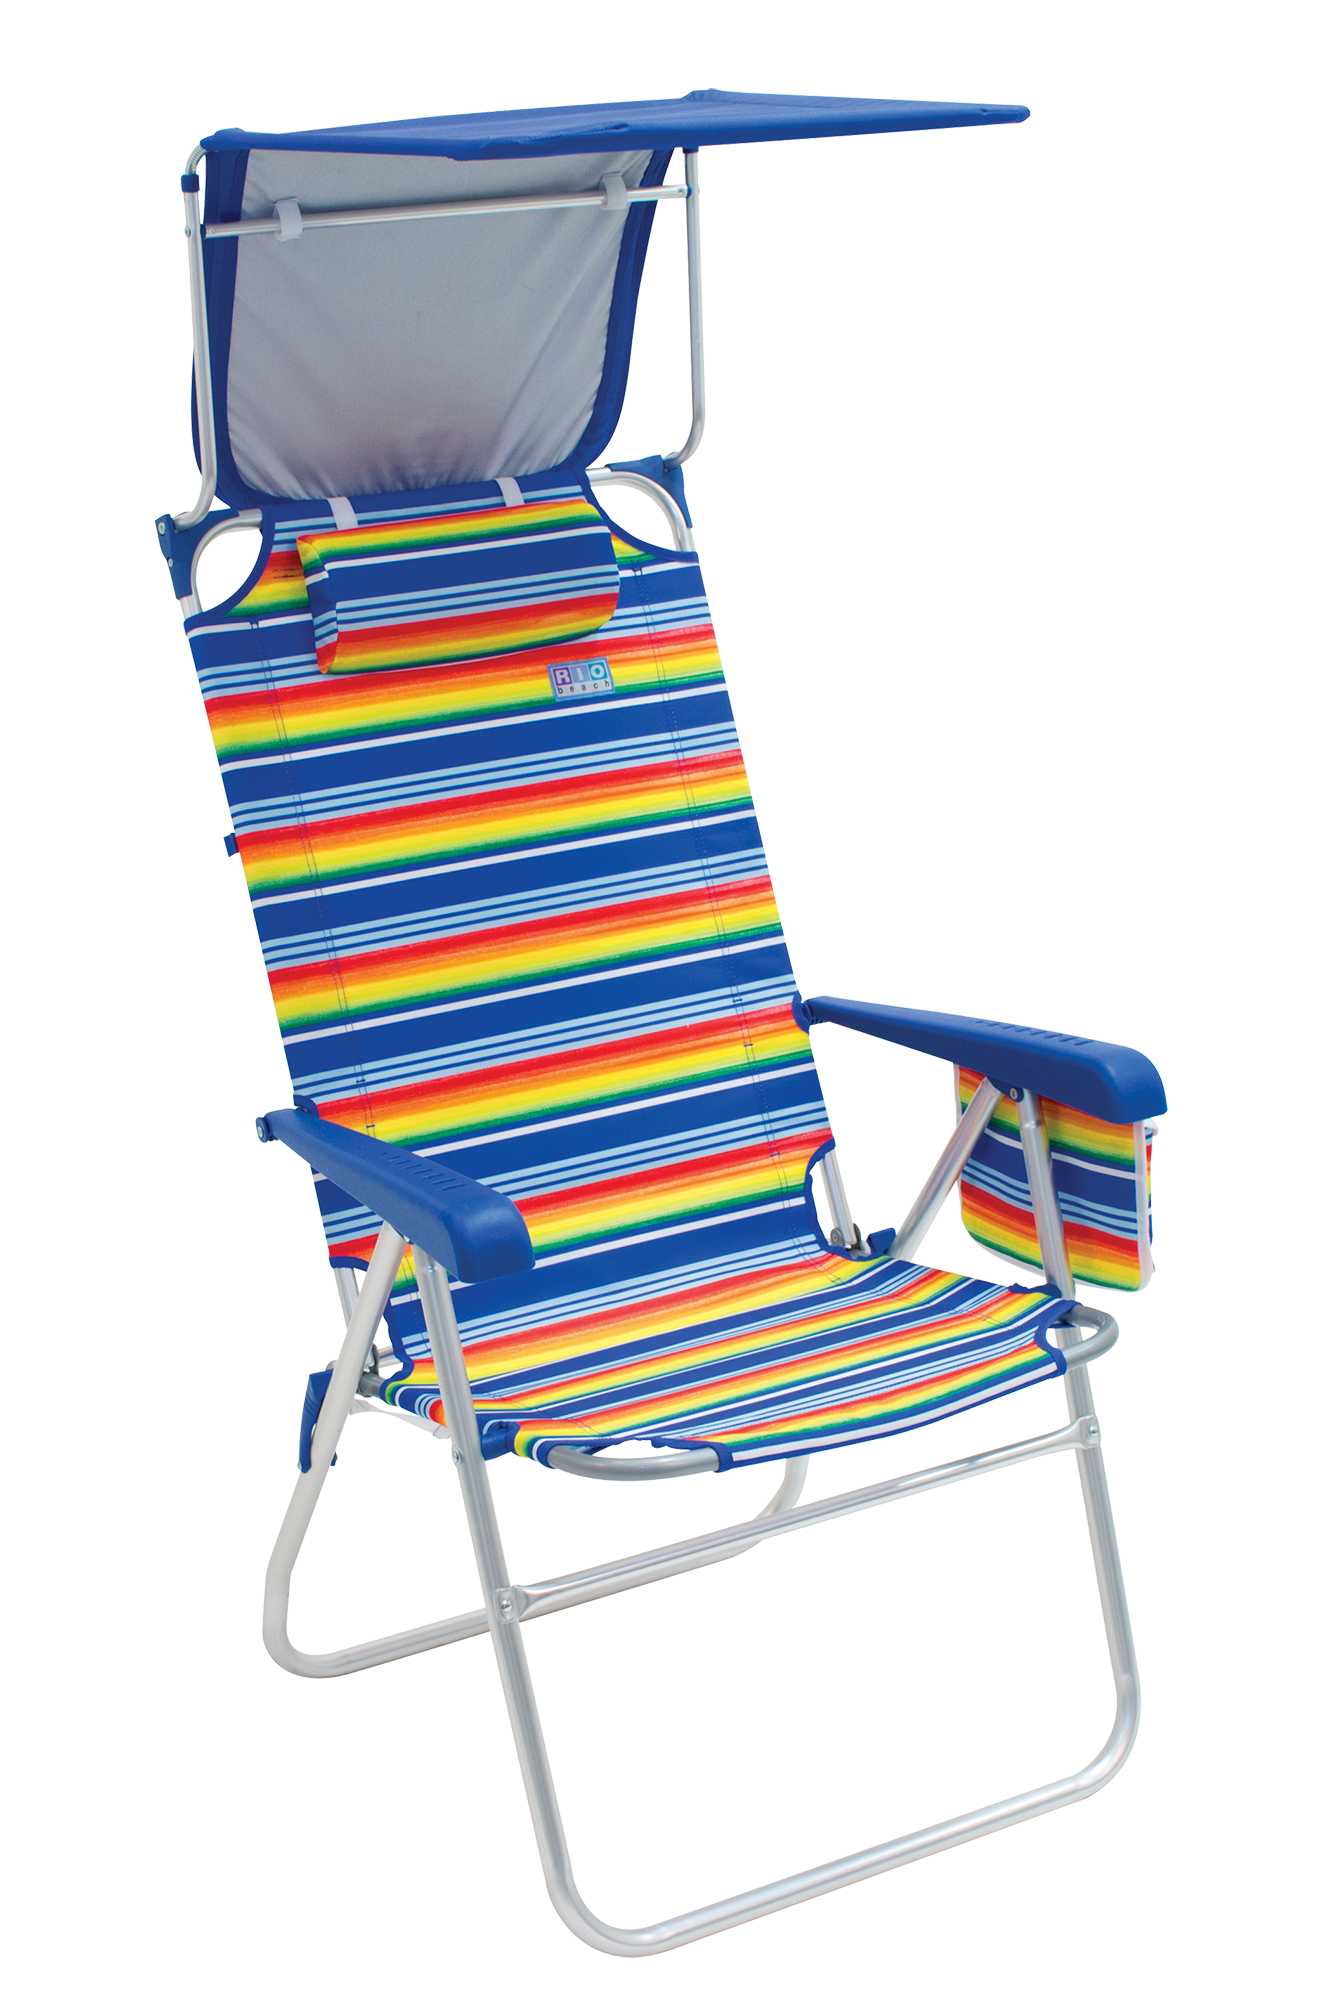 beach chair with canopy walmart